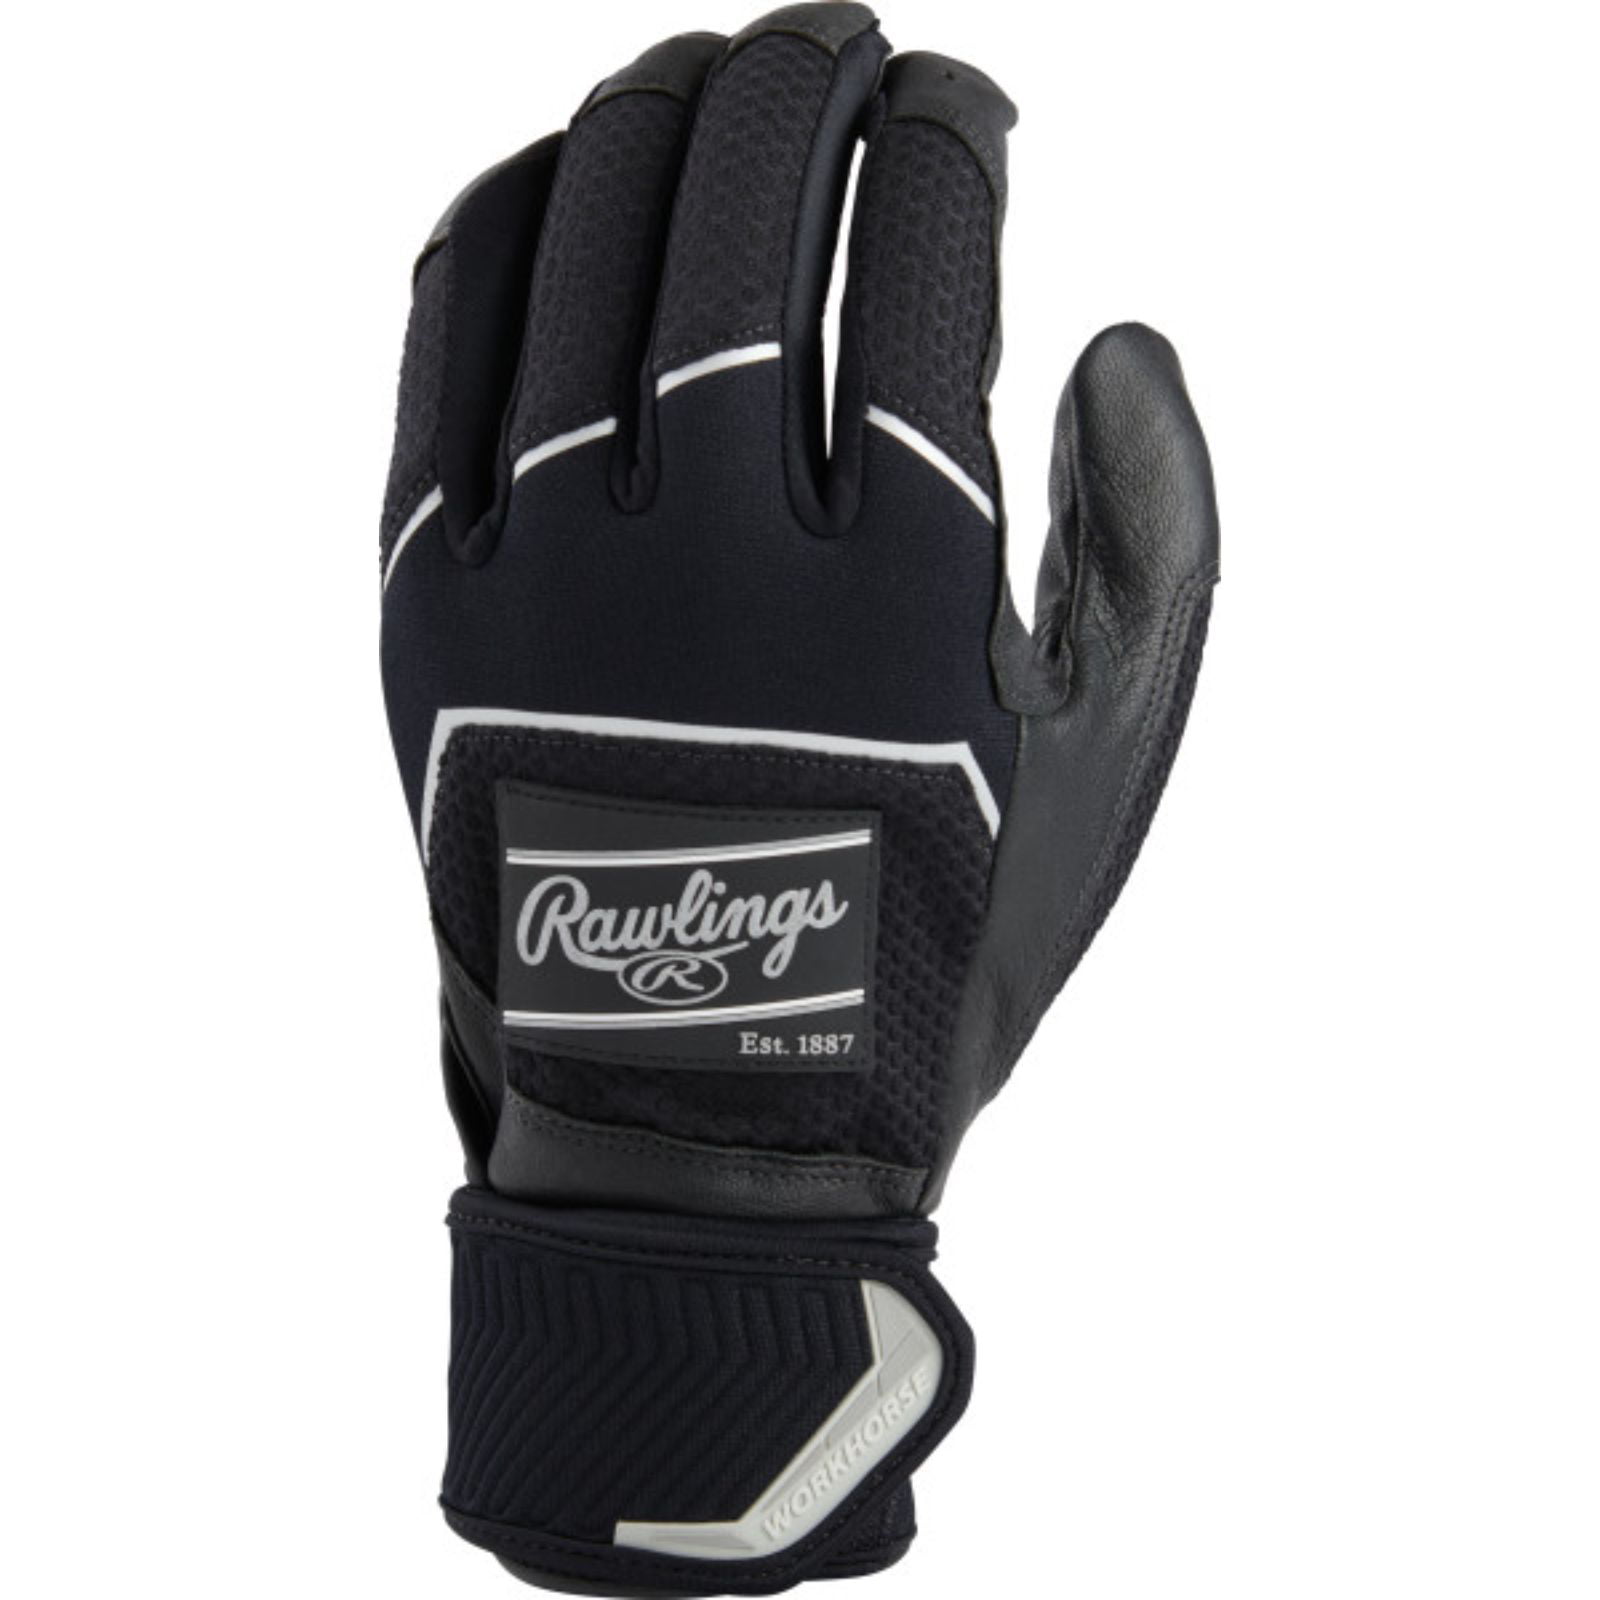 Black & White Rawlings Workhorse w/ Strap Adult Men's Baseball Batting Gloves 